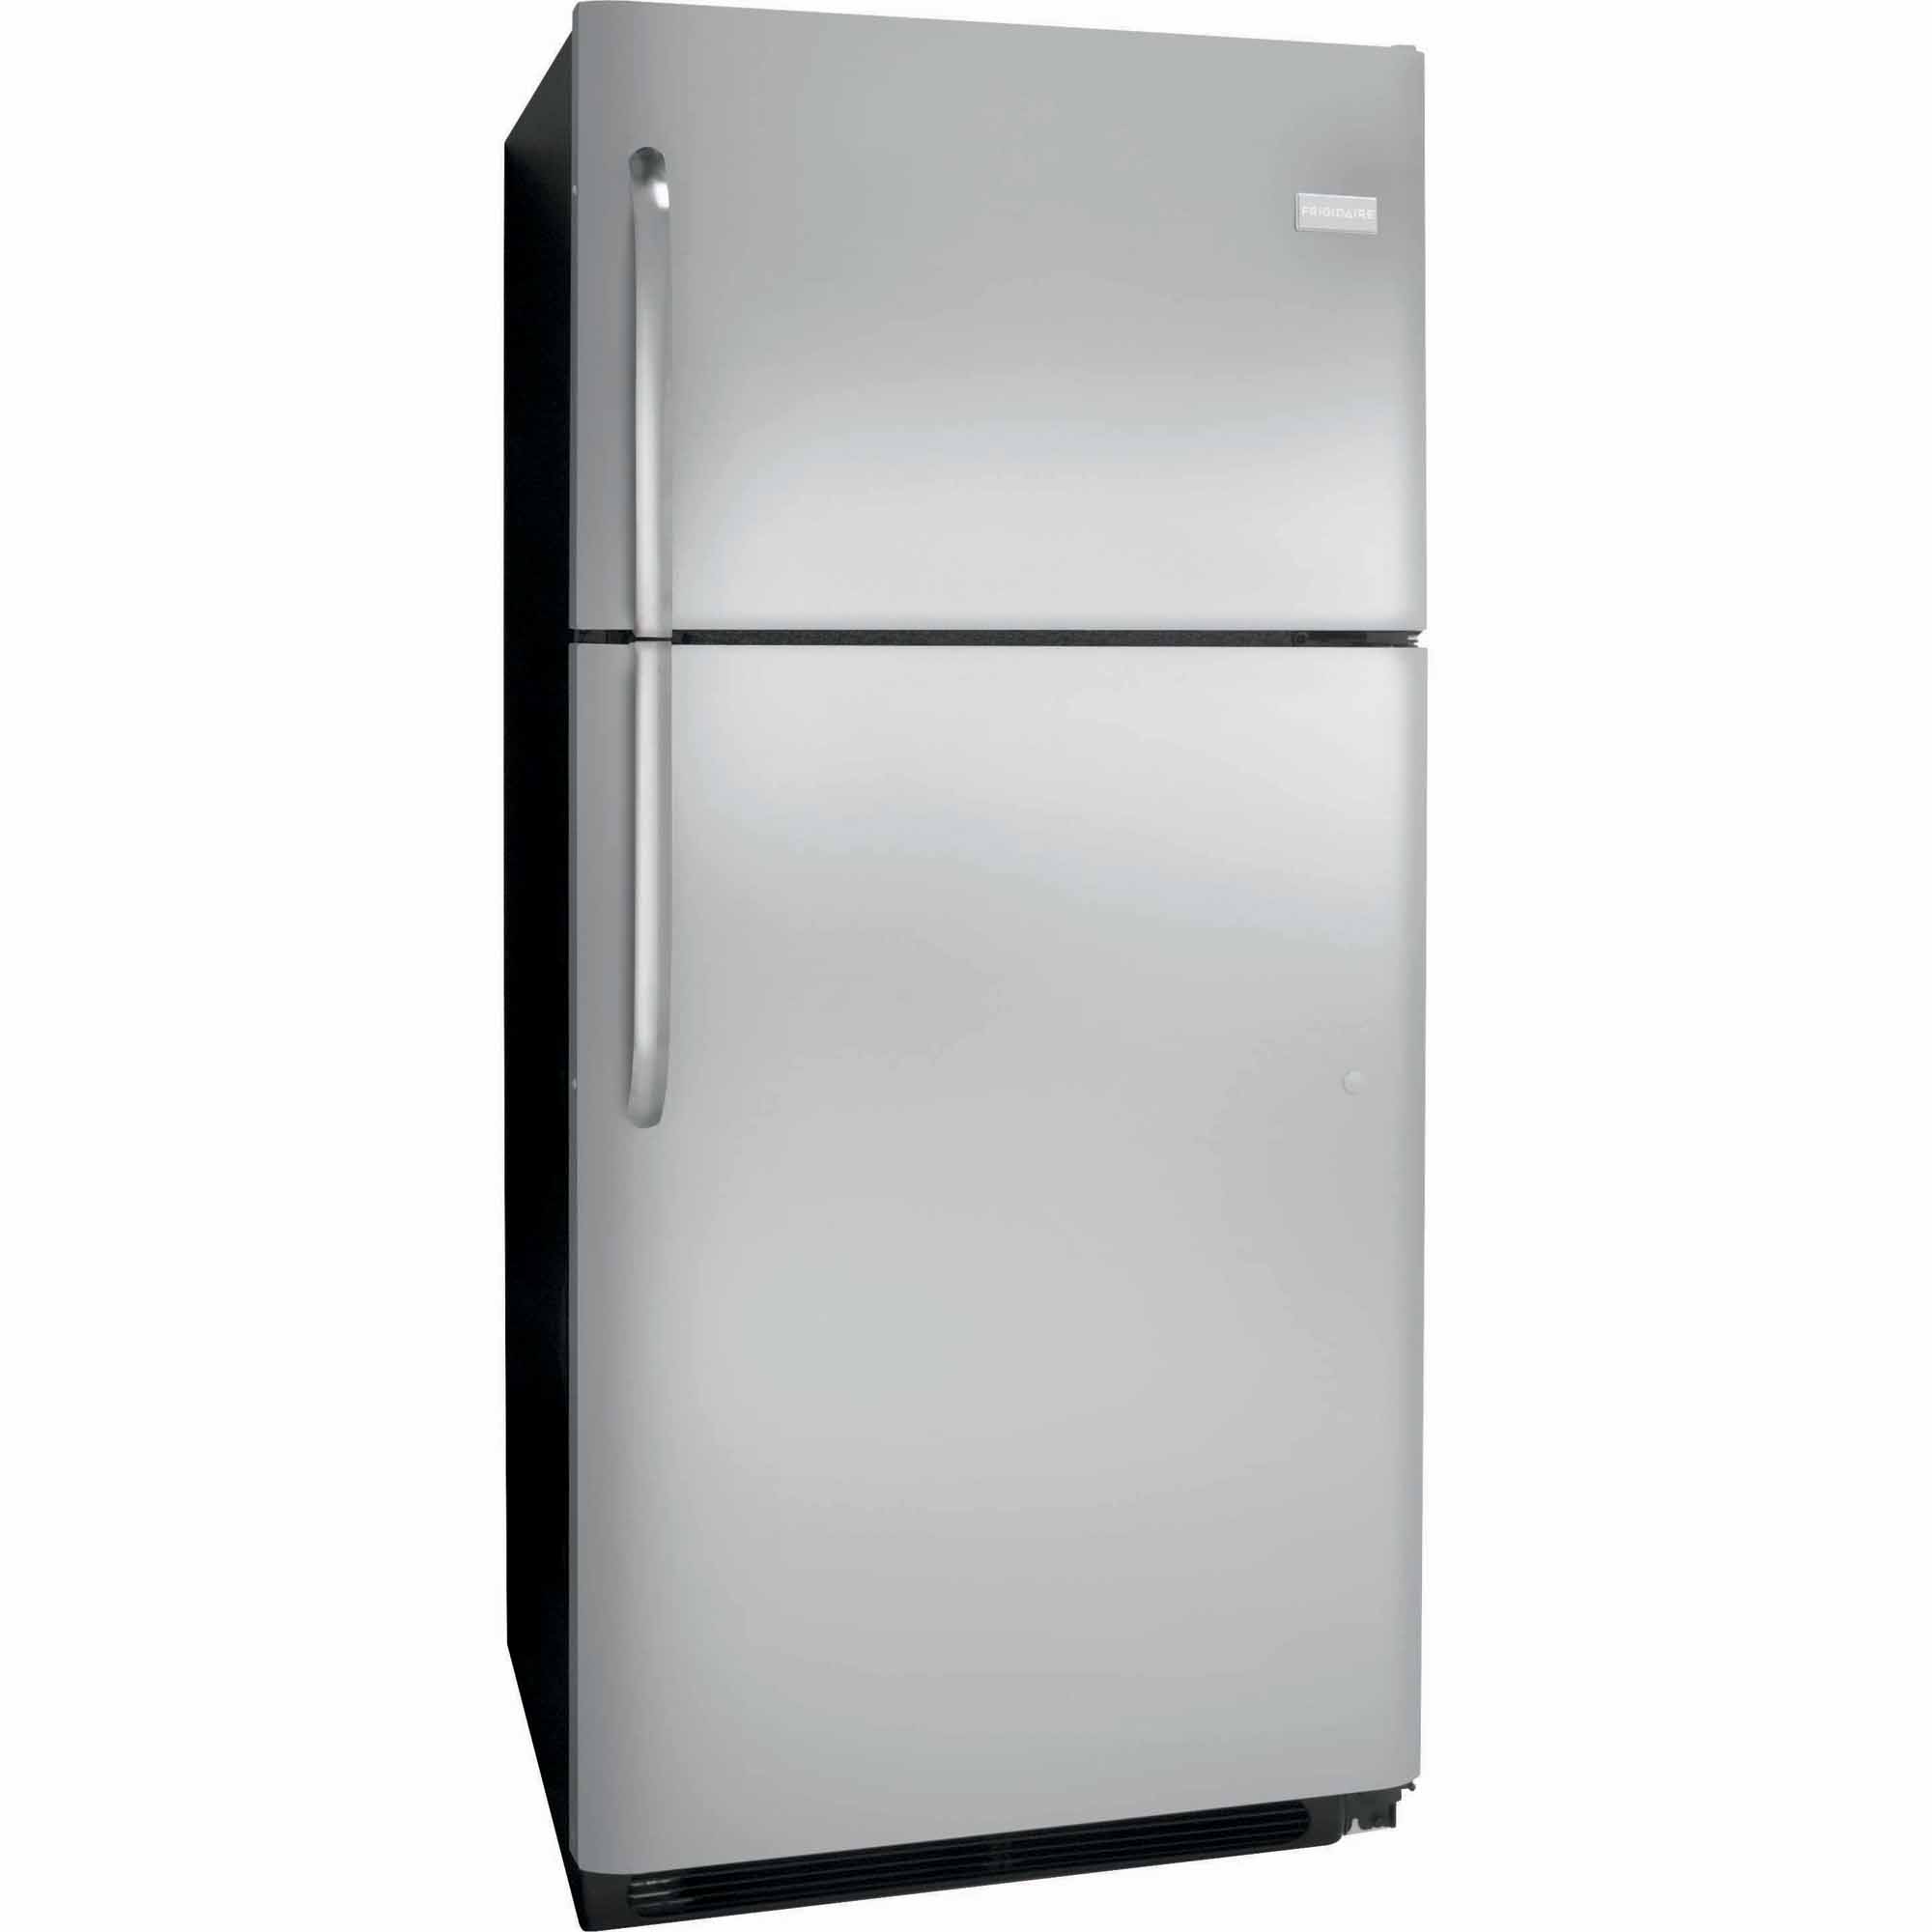 Frigidaire FFTR2021QS 20.4 cu. ft. Top Freezer Refrigerator - Stainless Frigidaire Refrigerator Stainless Steel Top Freezer